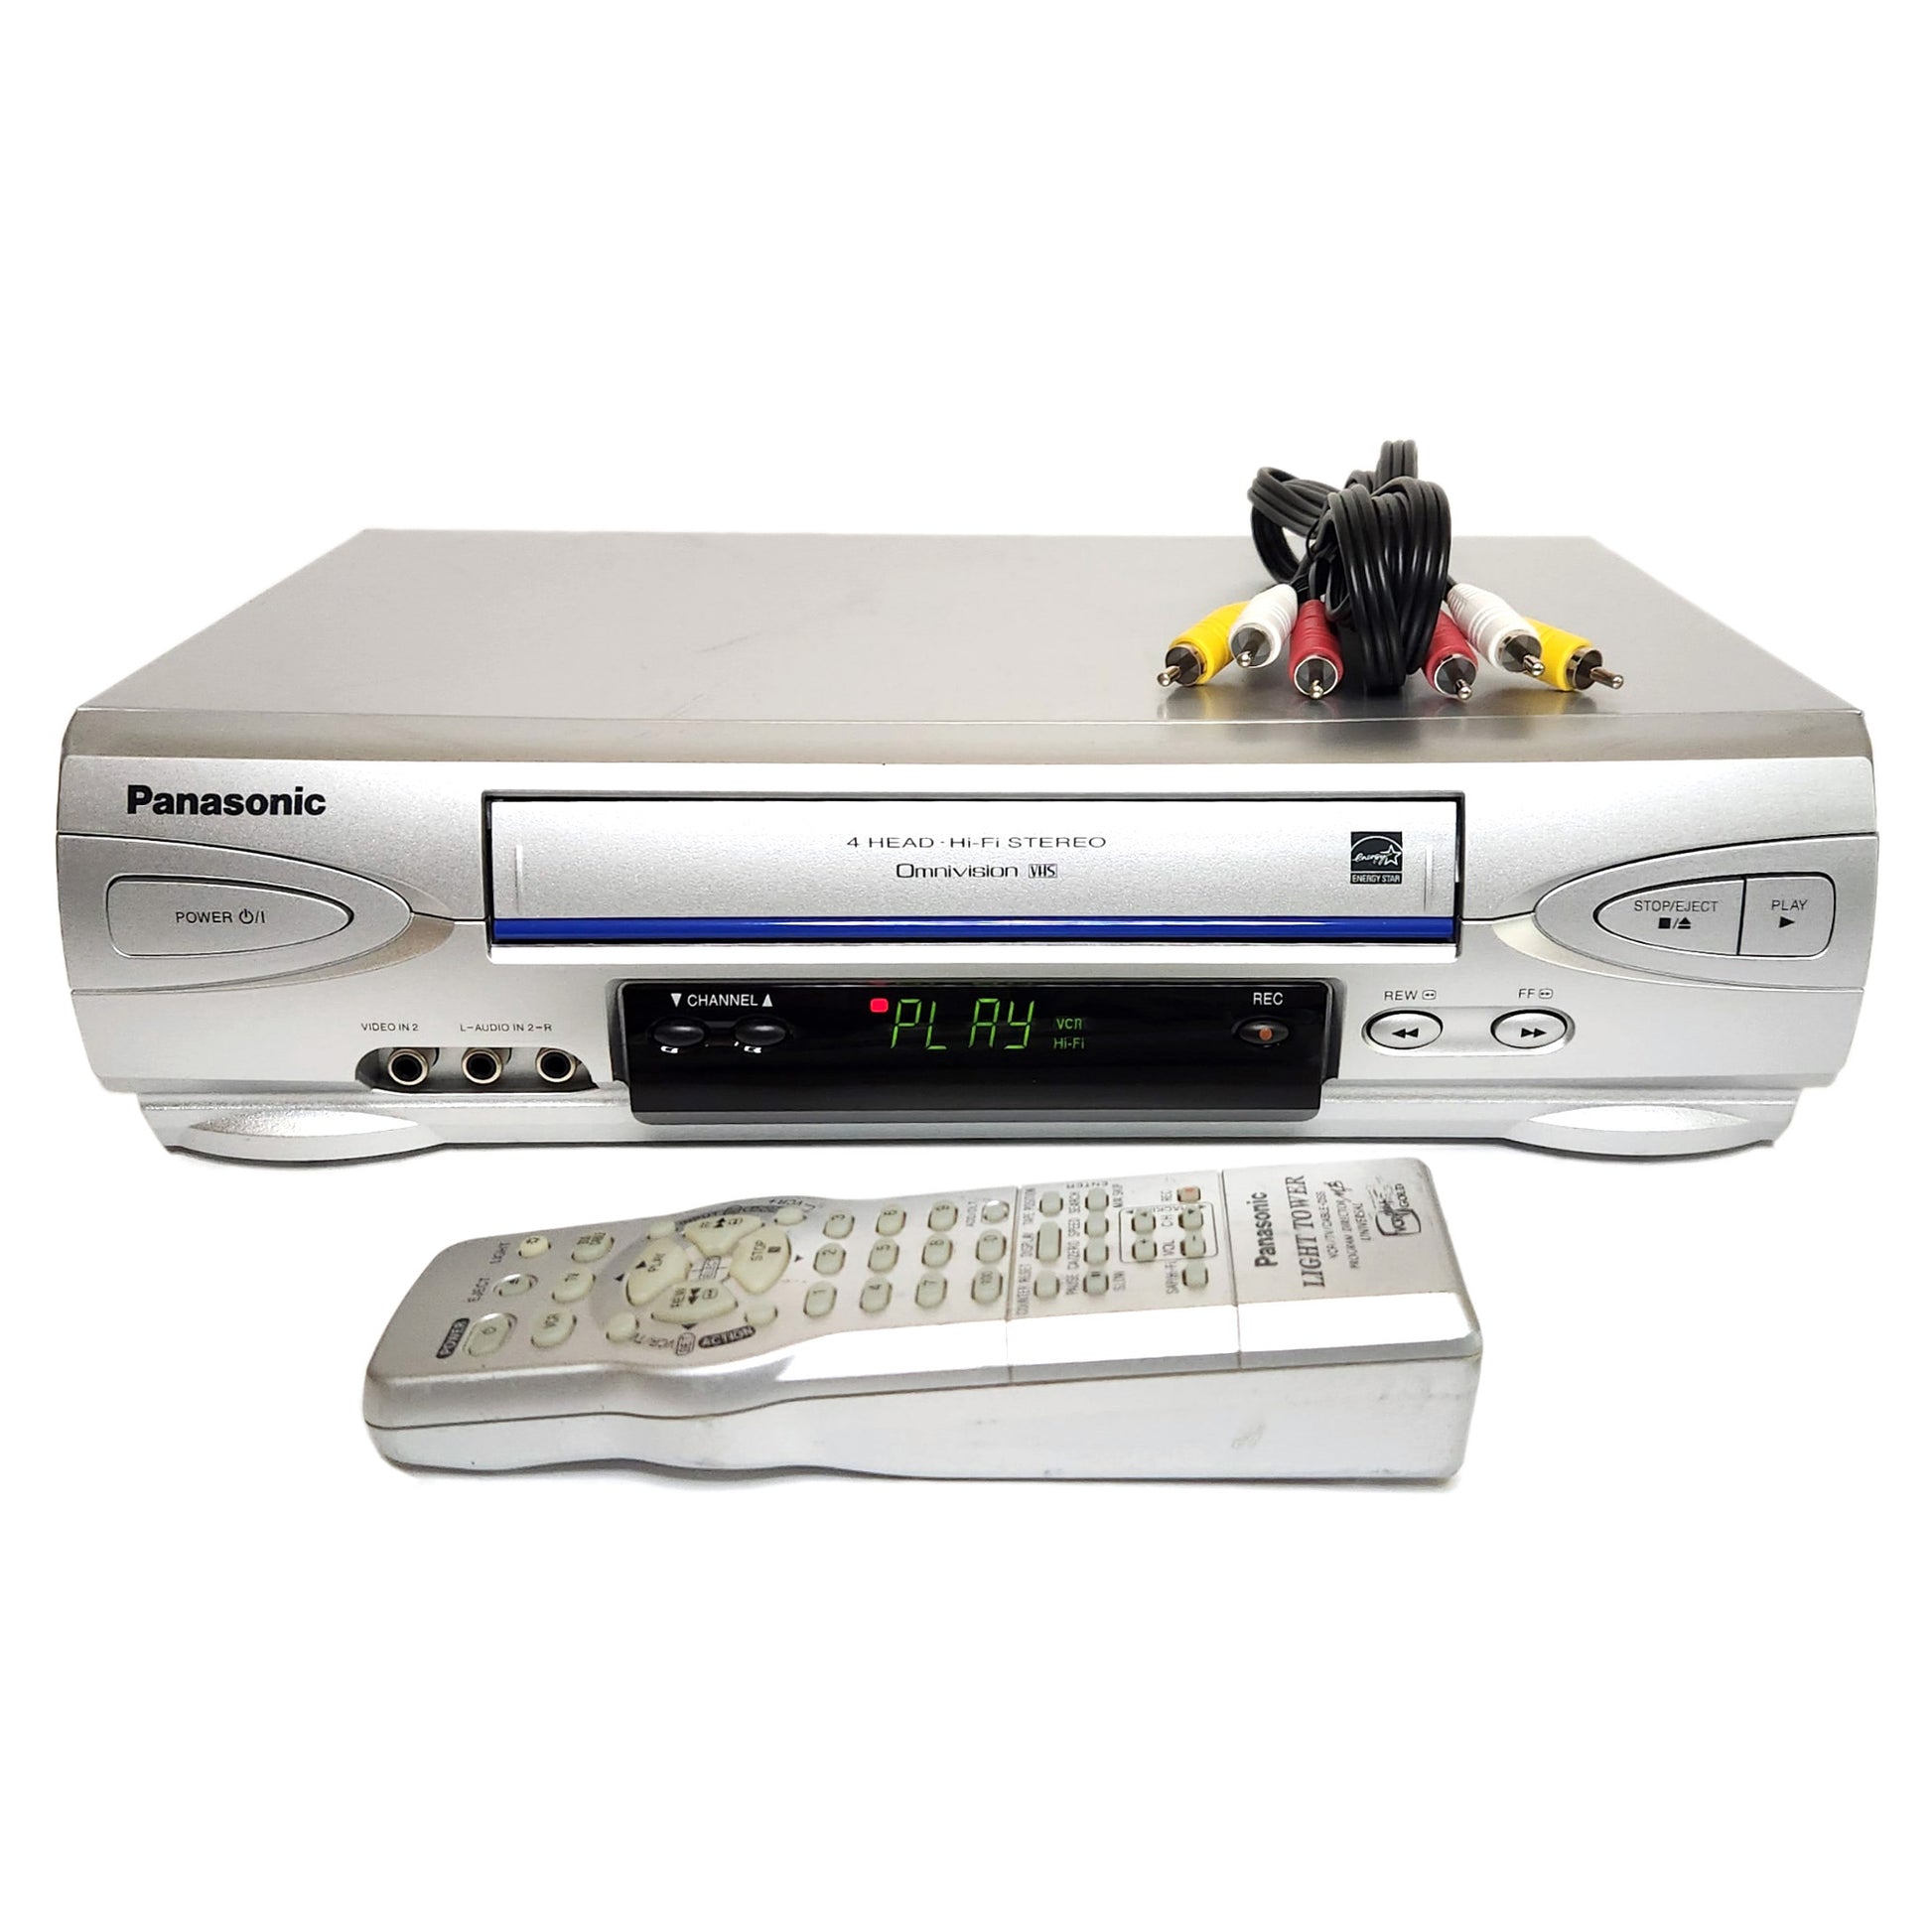 Panasonic PV-V4524S Omnivision VCR, 4-Head Hi-Fi Stereo